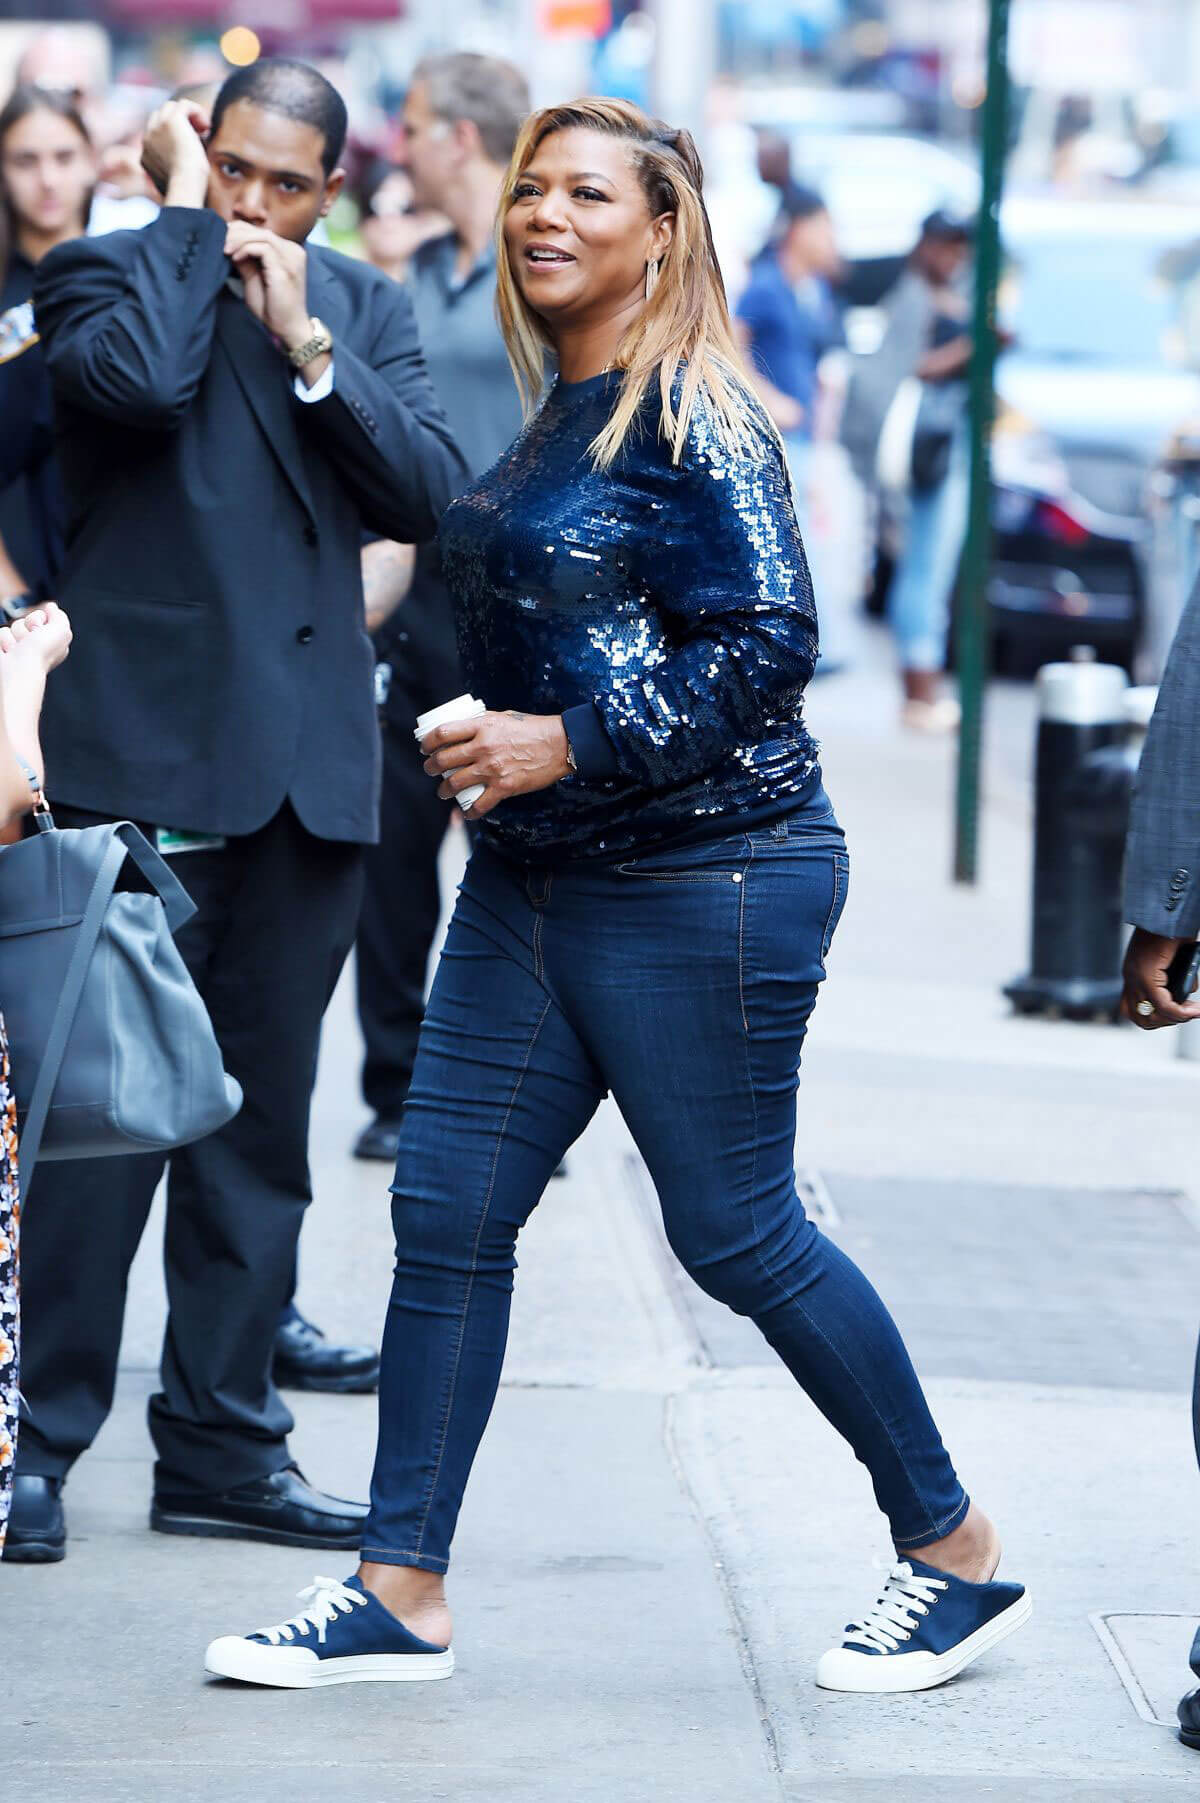 Queen Latifah at Good Morning America in New York Photos